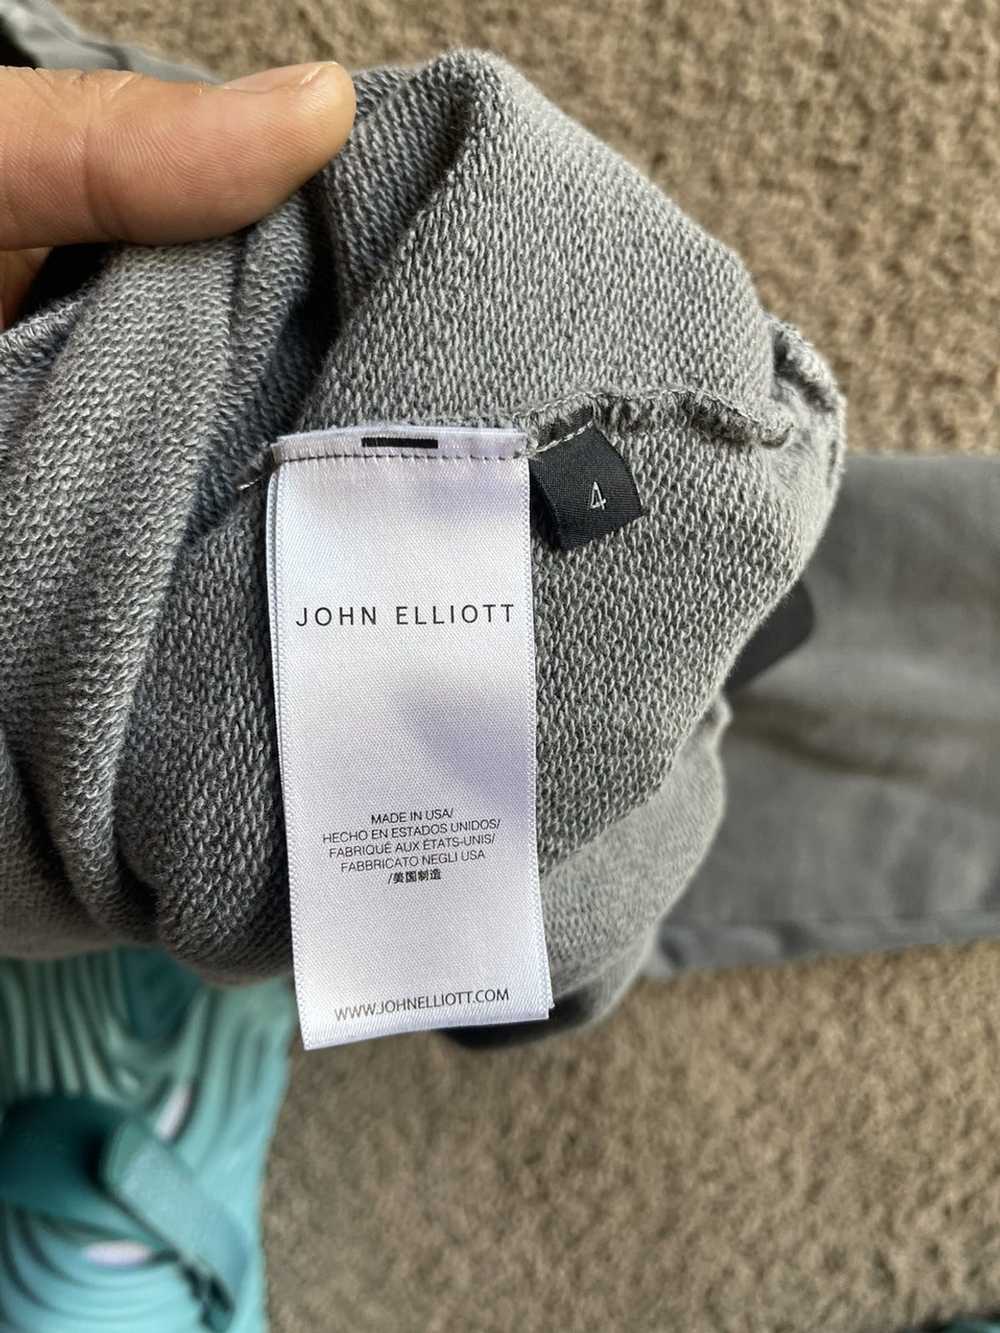 John Elliott John Elliot sweatshirt - image 4